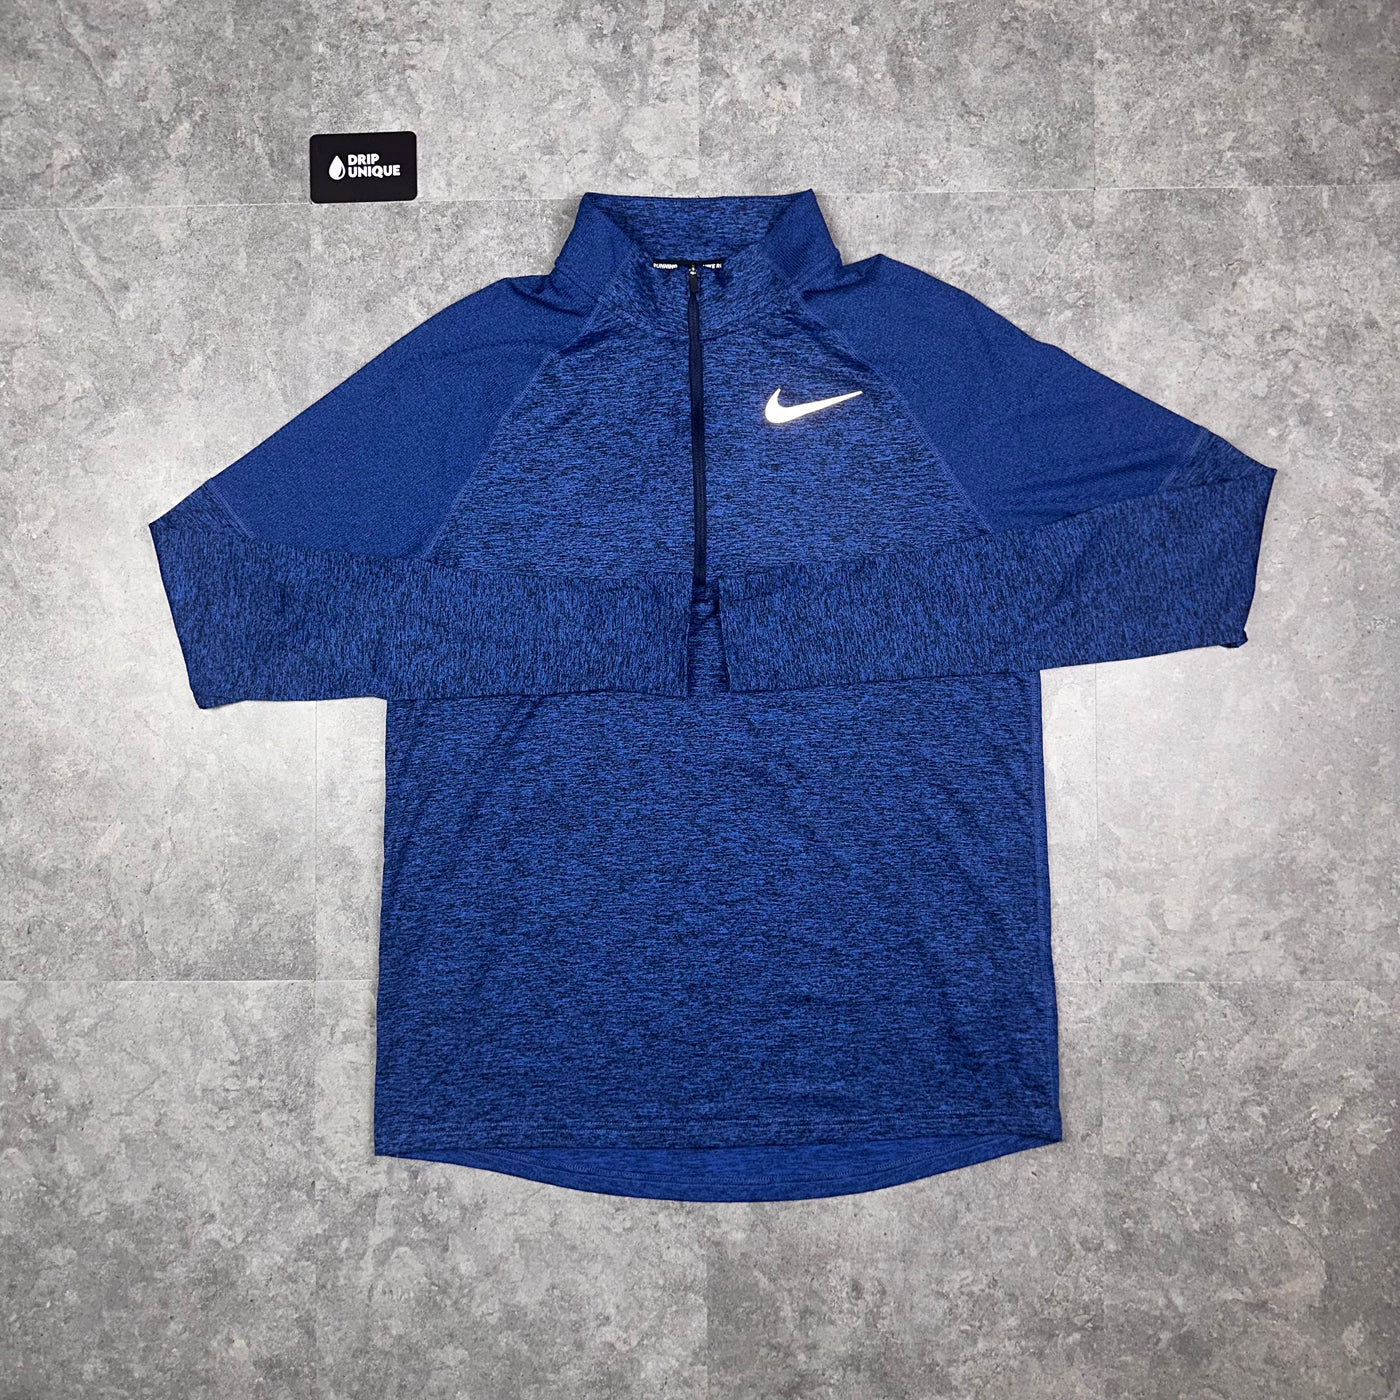 Nike Therma 1/4 Zip Top Royal Blue